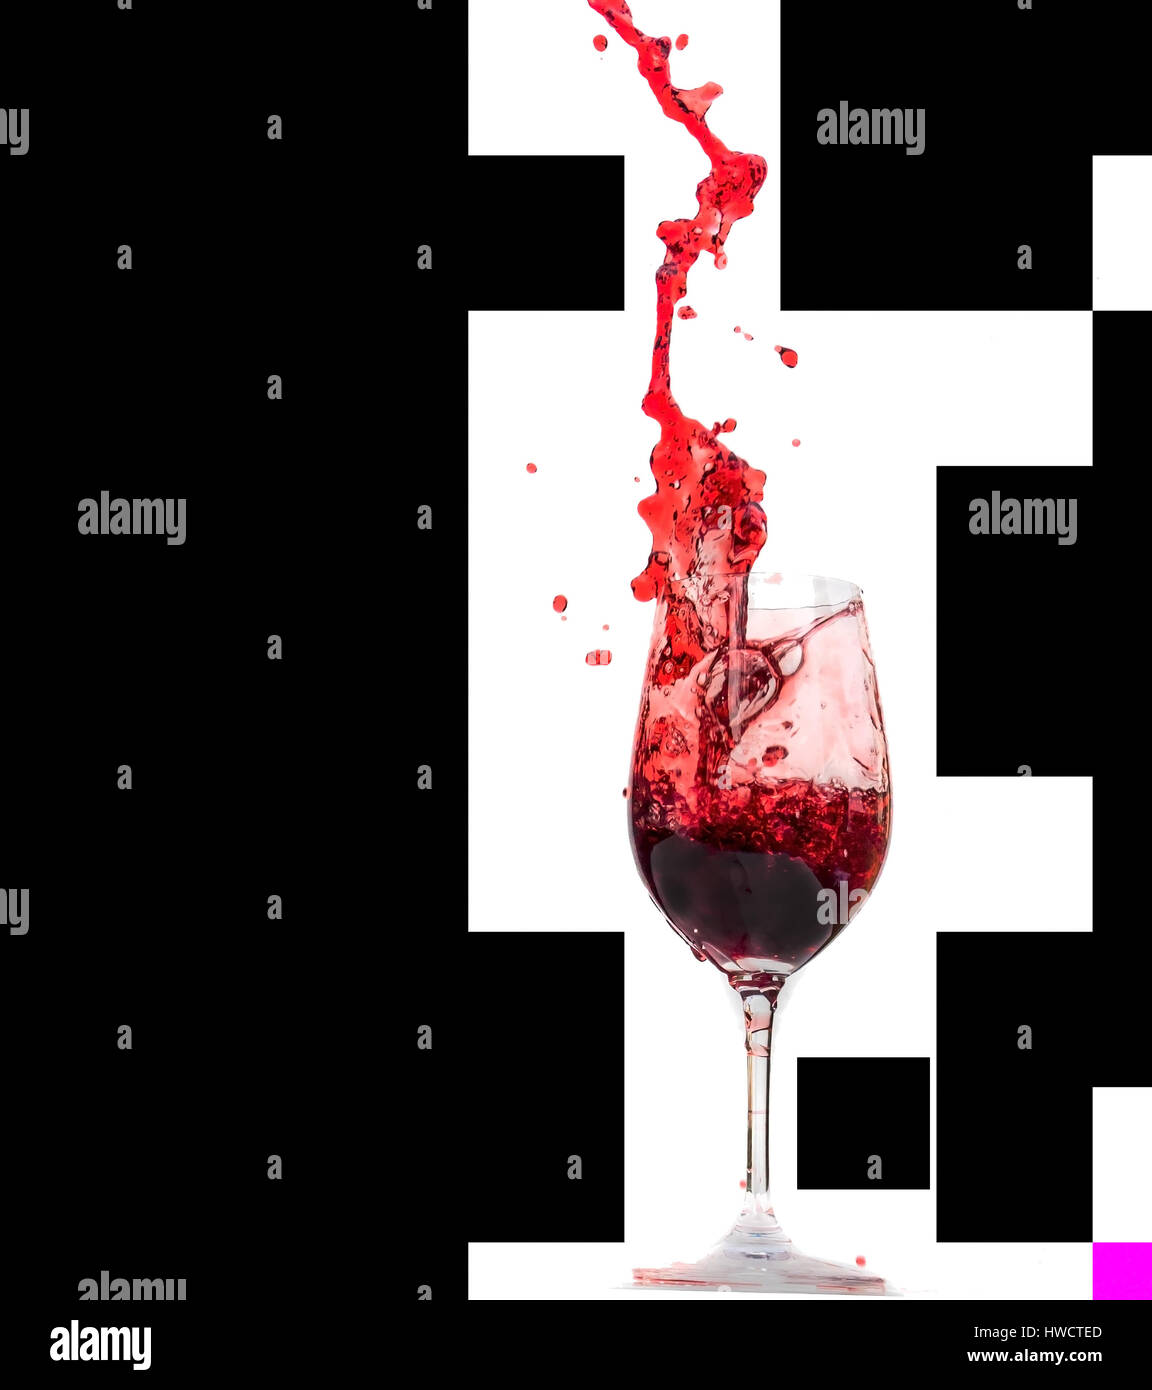 Le vin rouge est versé d'un verre. Vin au verre rouge., Rotwein wird aus einem Weinglas geschüttet. Wein im Rotweinglas. Banque D'Images